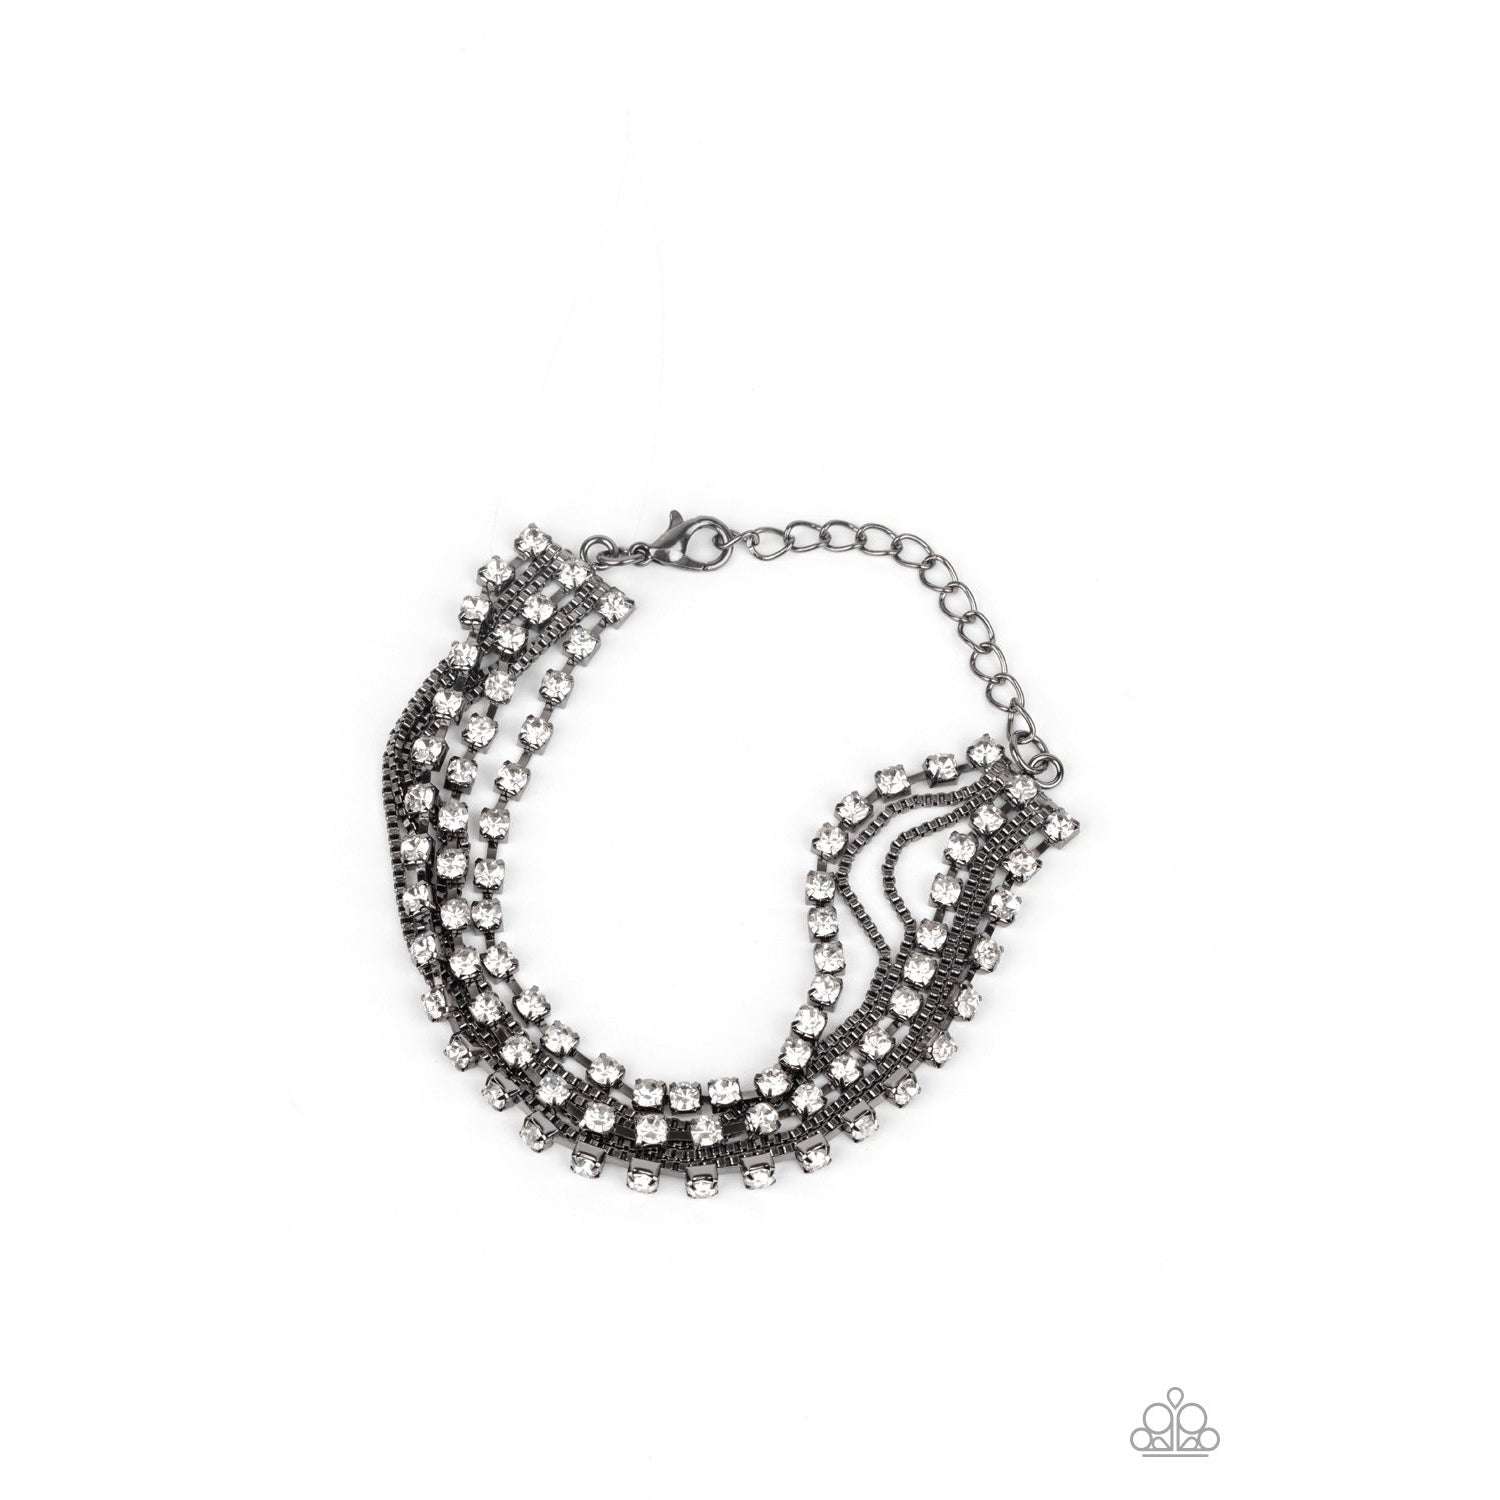 Thats a Smash! - Black Rhinestone Bracelet - Paparazzi Accessories - GlaMarous Titi Jewels